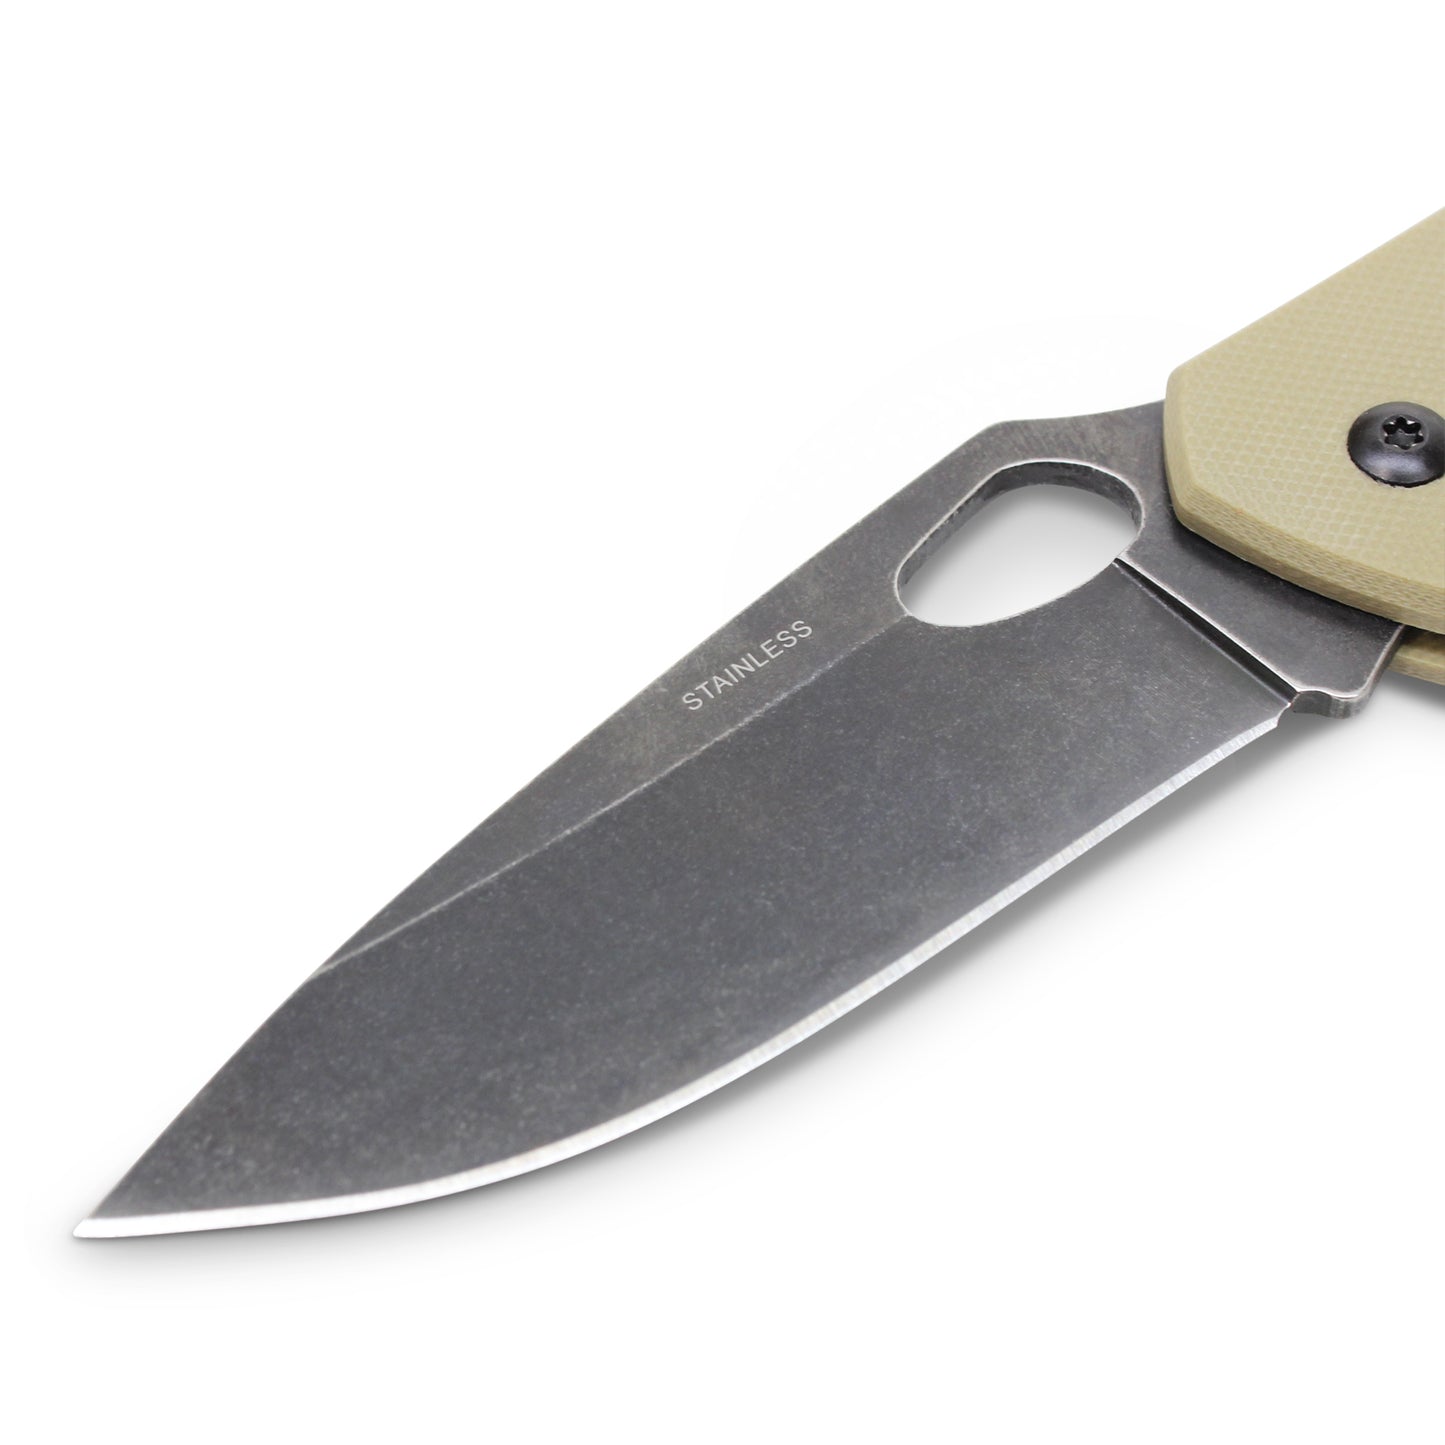 Xhunter Cobra Desert Rat Drop Point Blade Folding Knife - Coyote Tan 7.8 Inch Overall #kf0306 Dim Gray